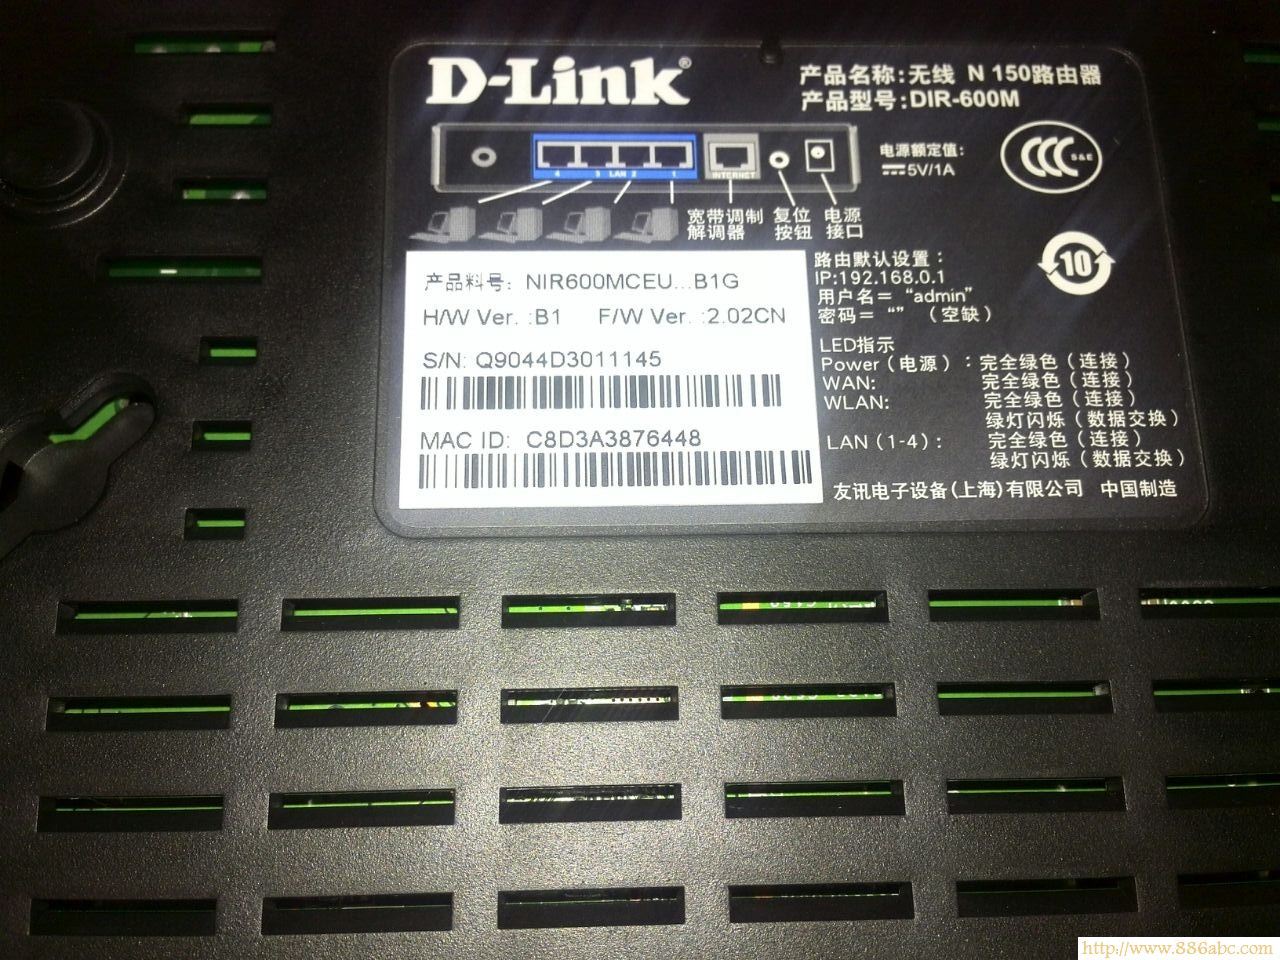 D-Link设置,ping 192.168.1.1,网件路由器,ip在线代理,dhcp服务器是什么,lion是什么意思